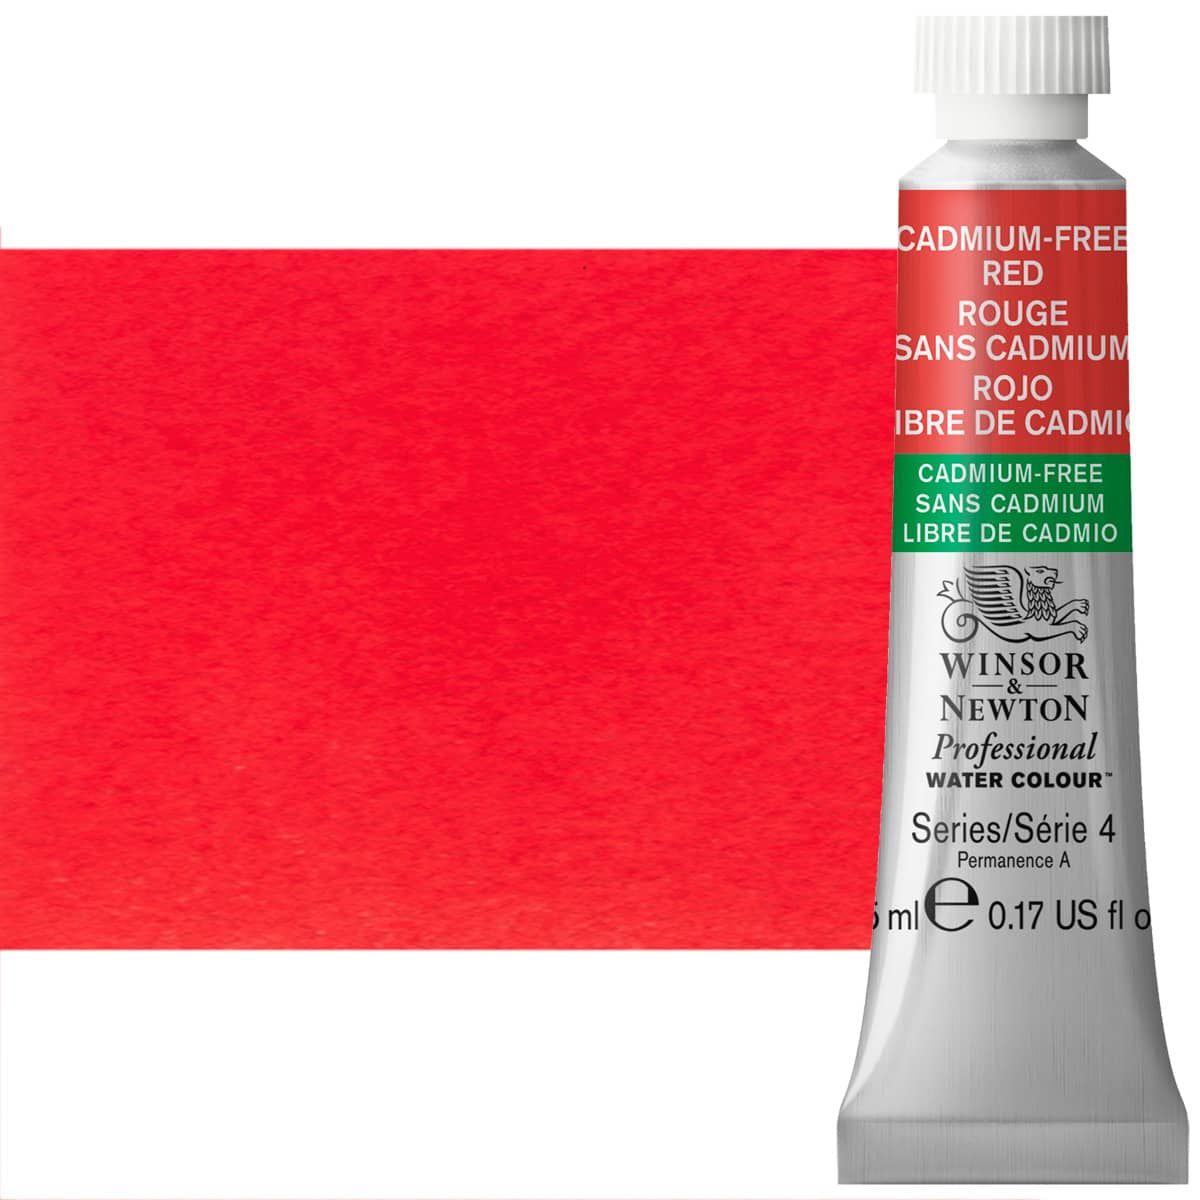 Winsor & Newton Professional Watercolor - Cadmium-Free Red, 5ml Tube